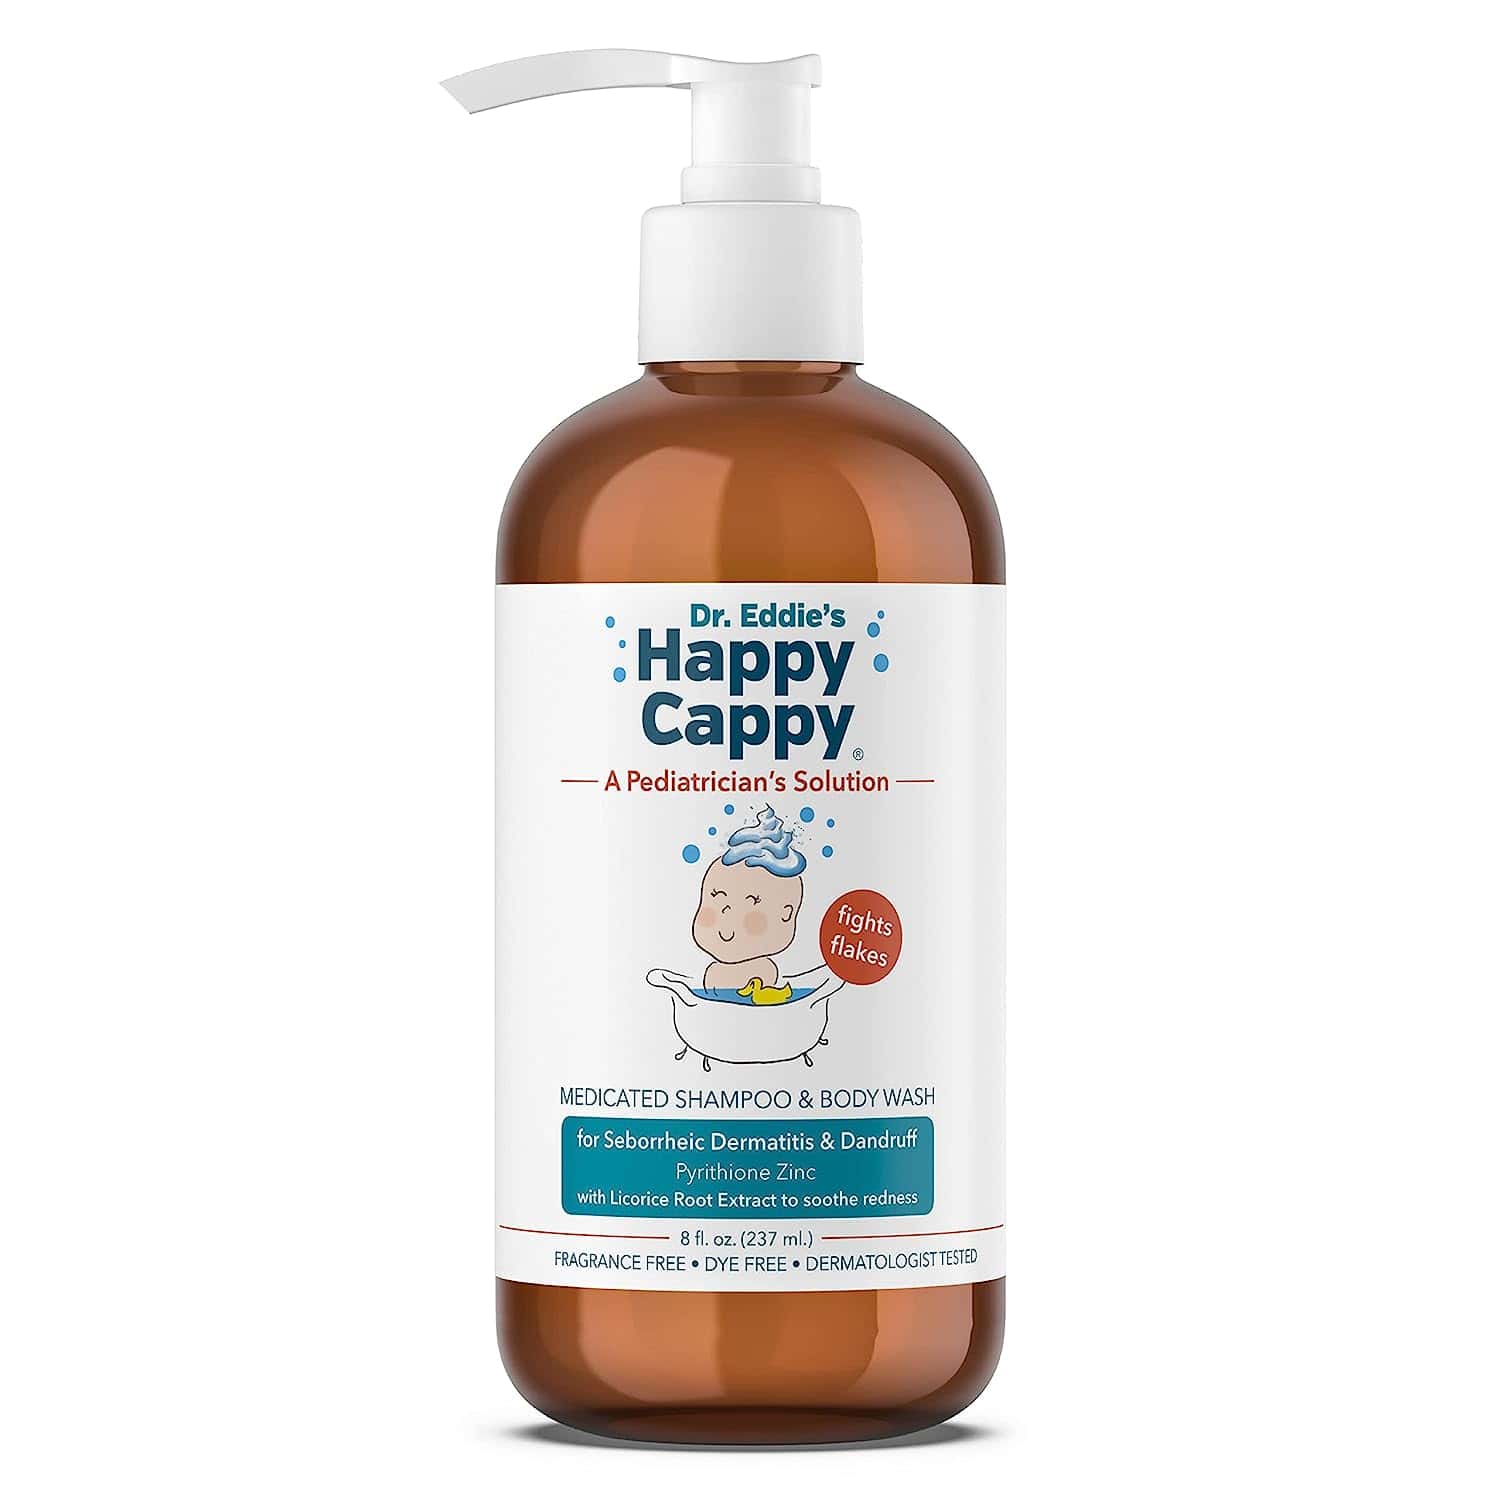 Dr. Eddie's Happy Cappy Medicated Shampoo